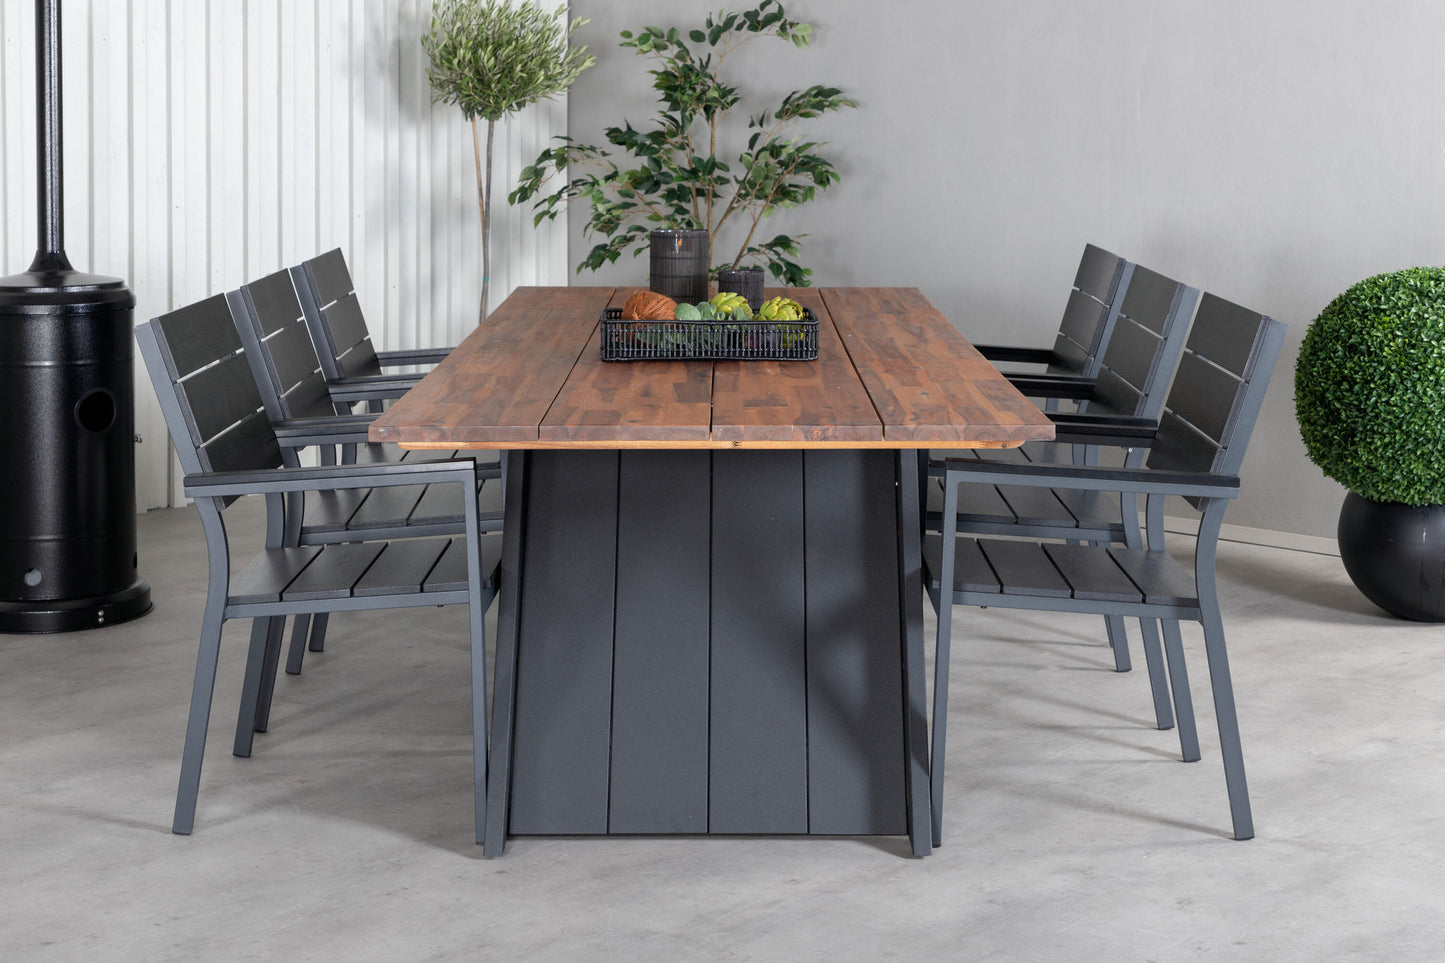 Doory - Spisebord, sort stål / akacie top i teak look - 250*100cm+Levels Stol (stabelbar) - Sort Alu / Sort Nonwood